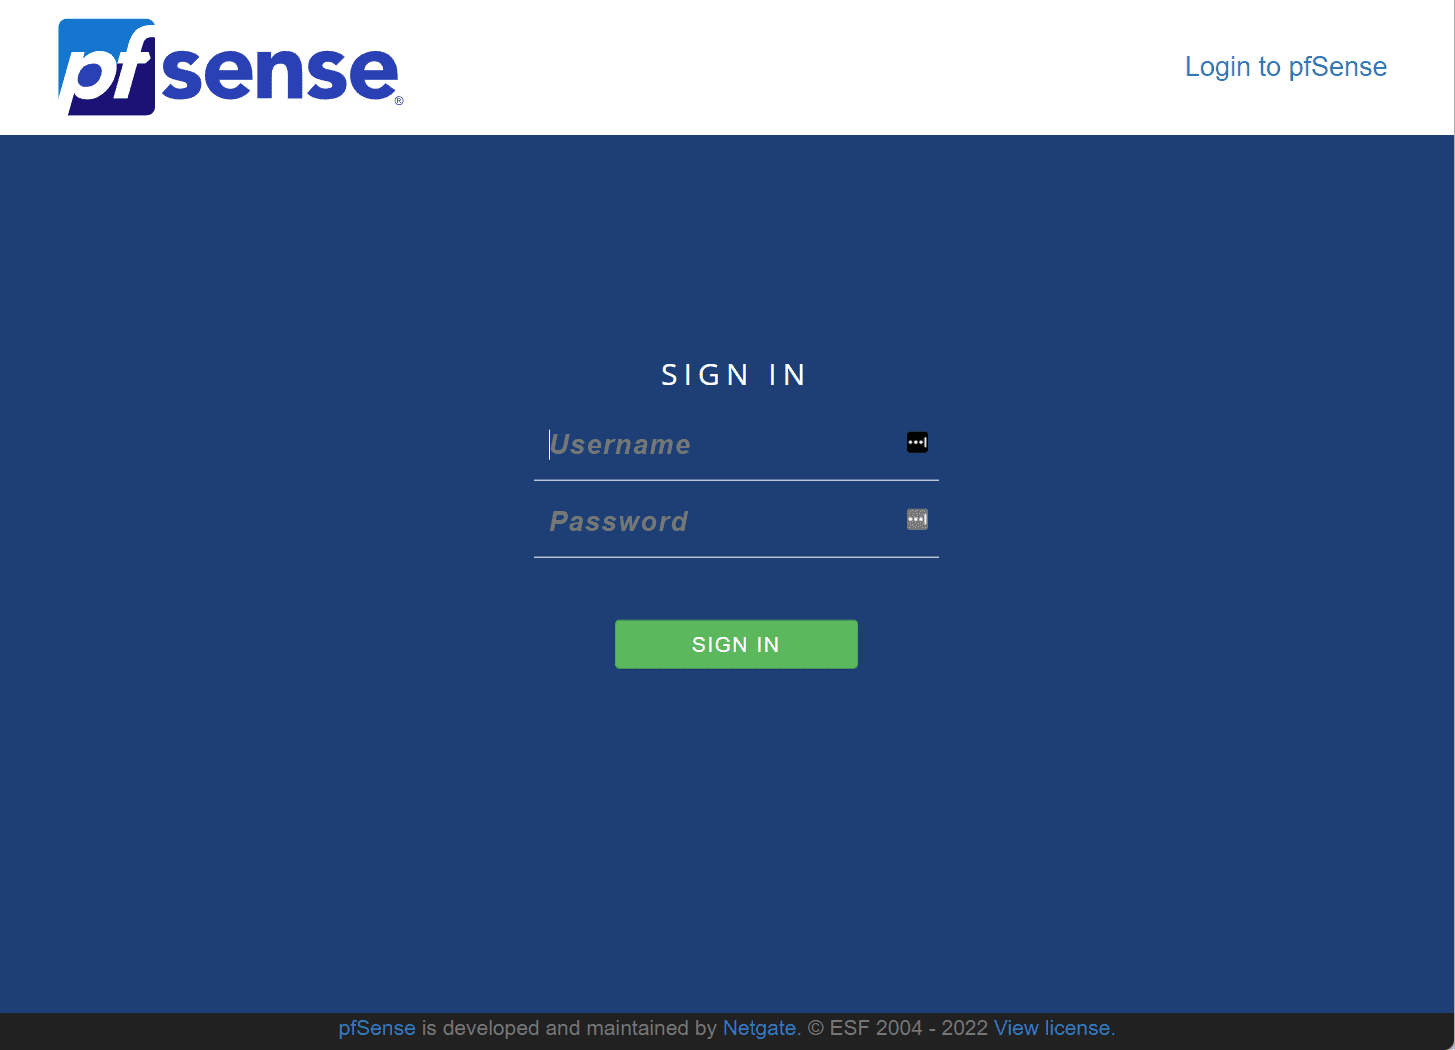 pfSense login screen for the web UI